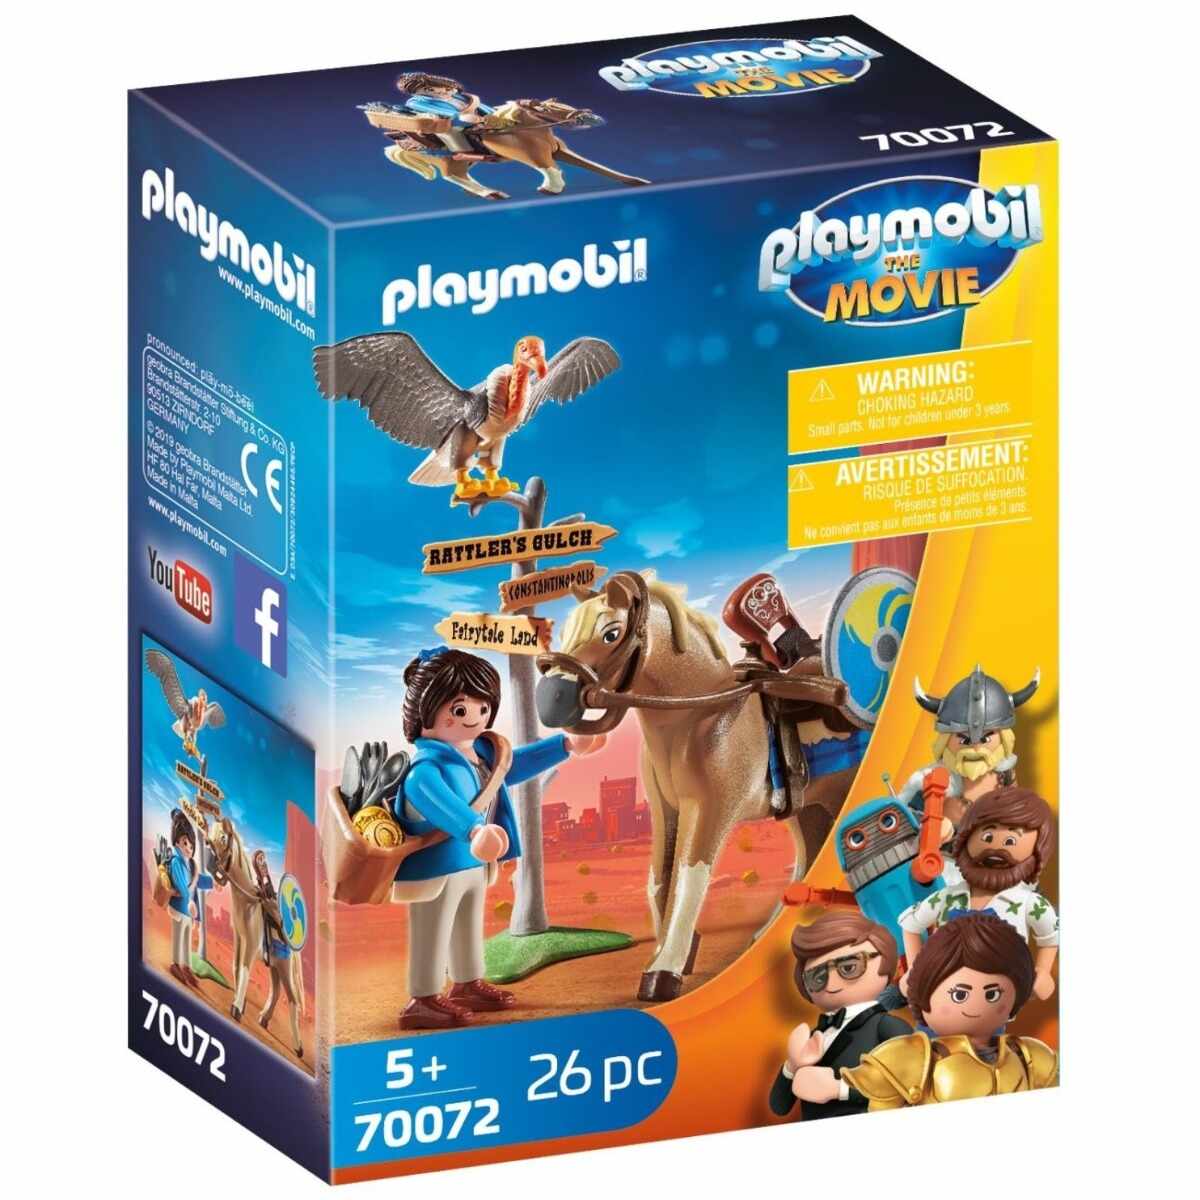 Playmobil PM70072 Marla Cu Cal